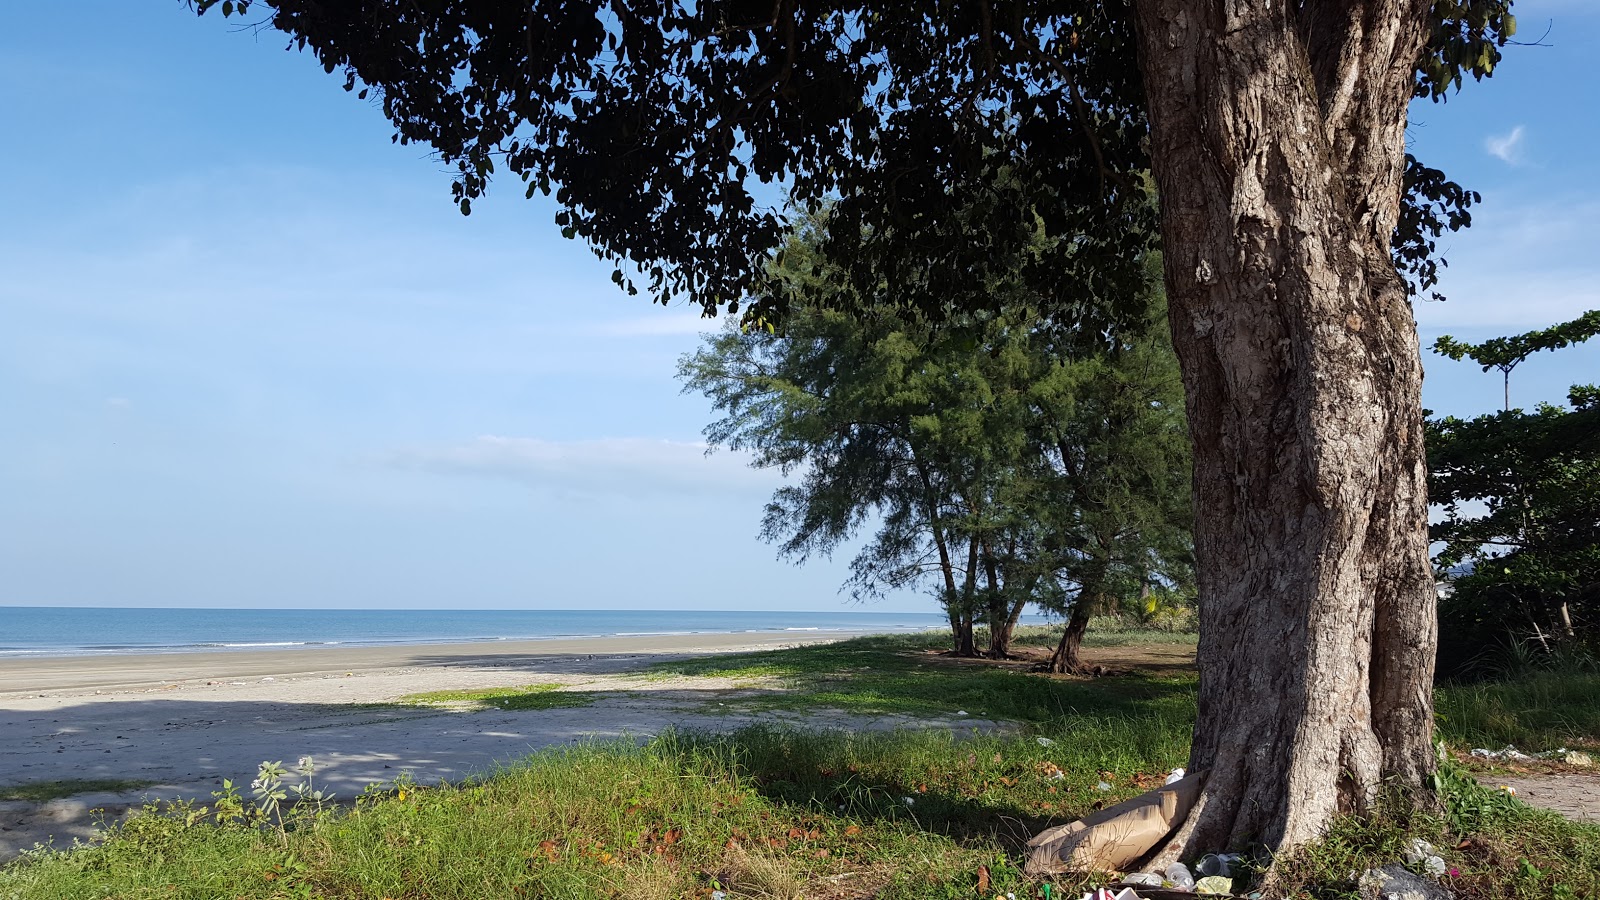 Zdjęcie Batu Hitam Mandurah Beach częściowo obszar hotelowy